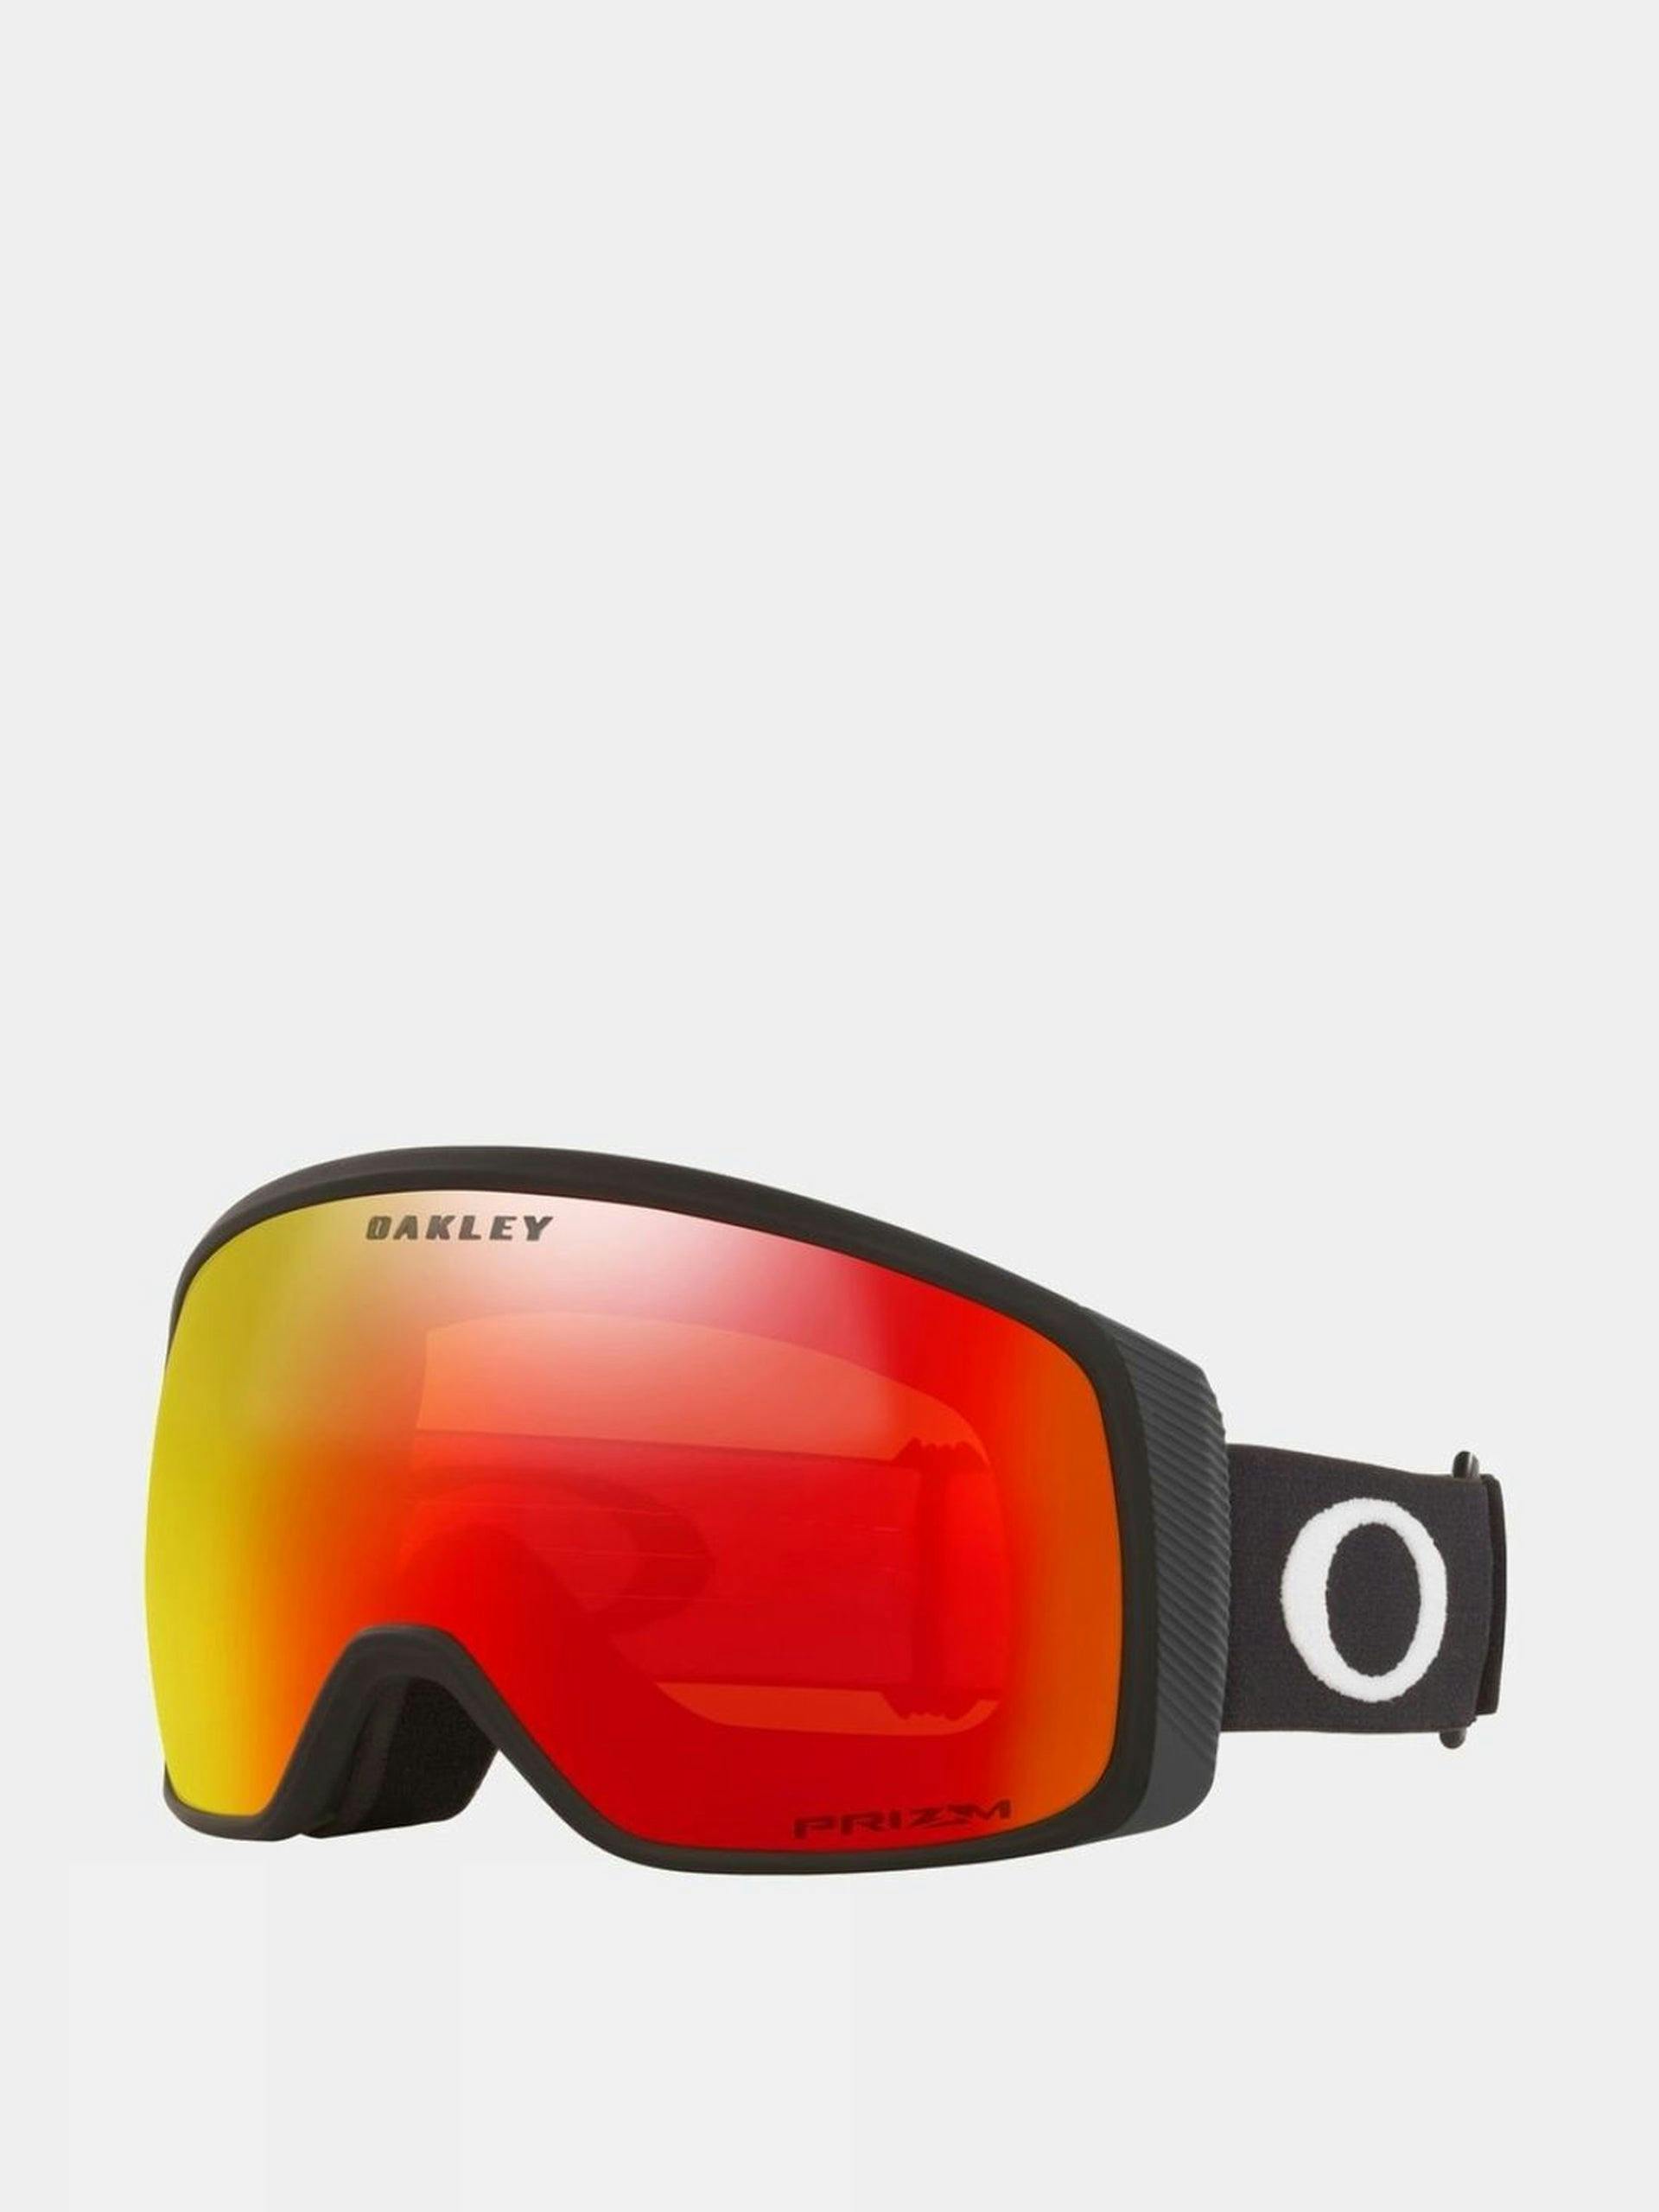 Orange and yellow snow goggles